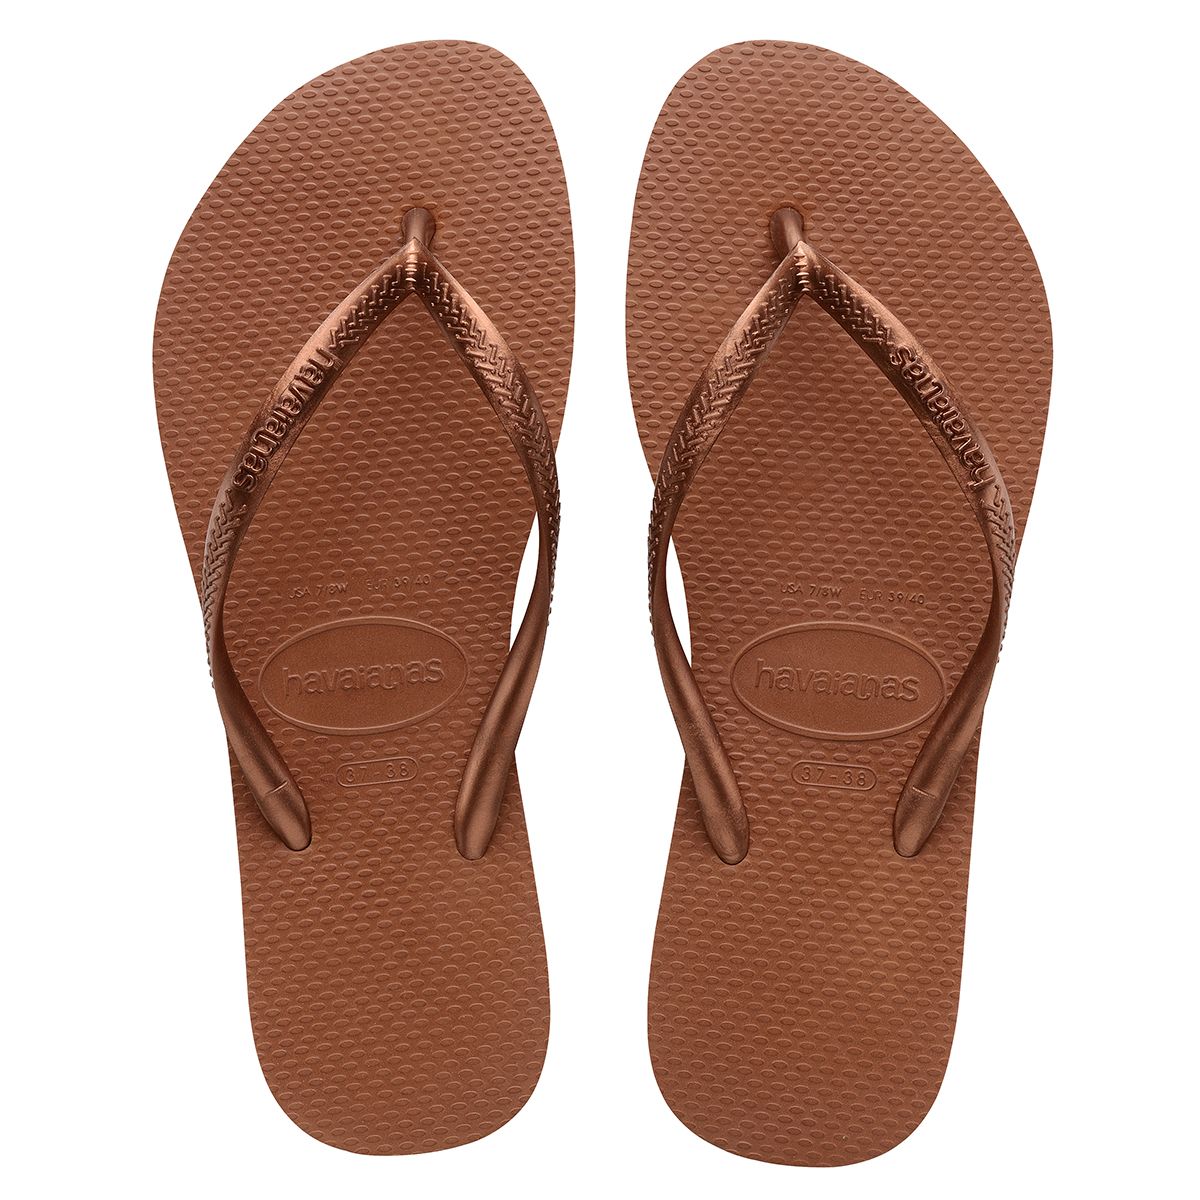 Havaianas Slim Womens Sandal 9385-Rust-Metallic Copper 11